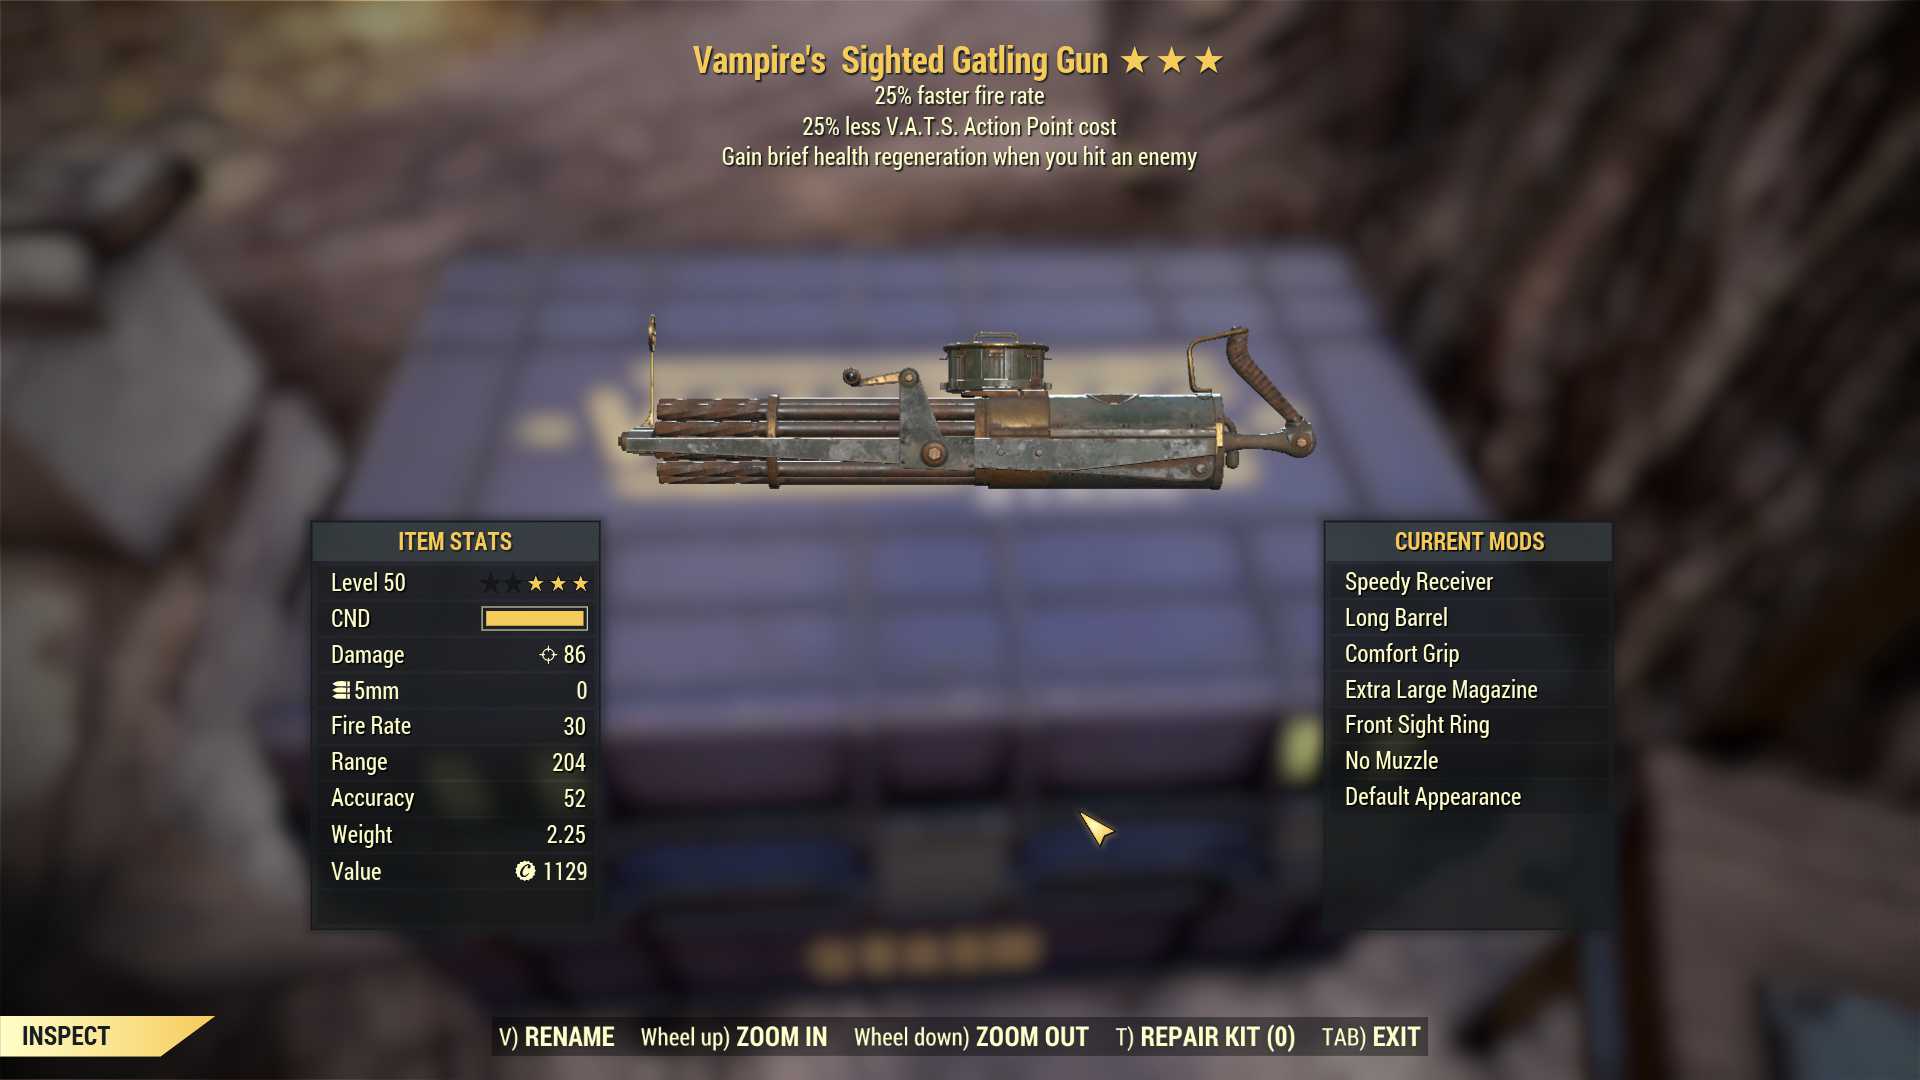 Vampire's Gatling Gun (25% faster fire rate, 25% less VATS AP cost)